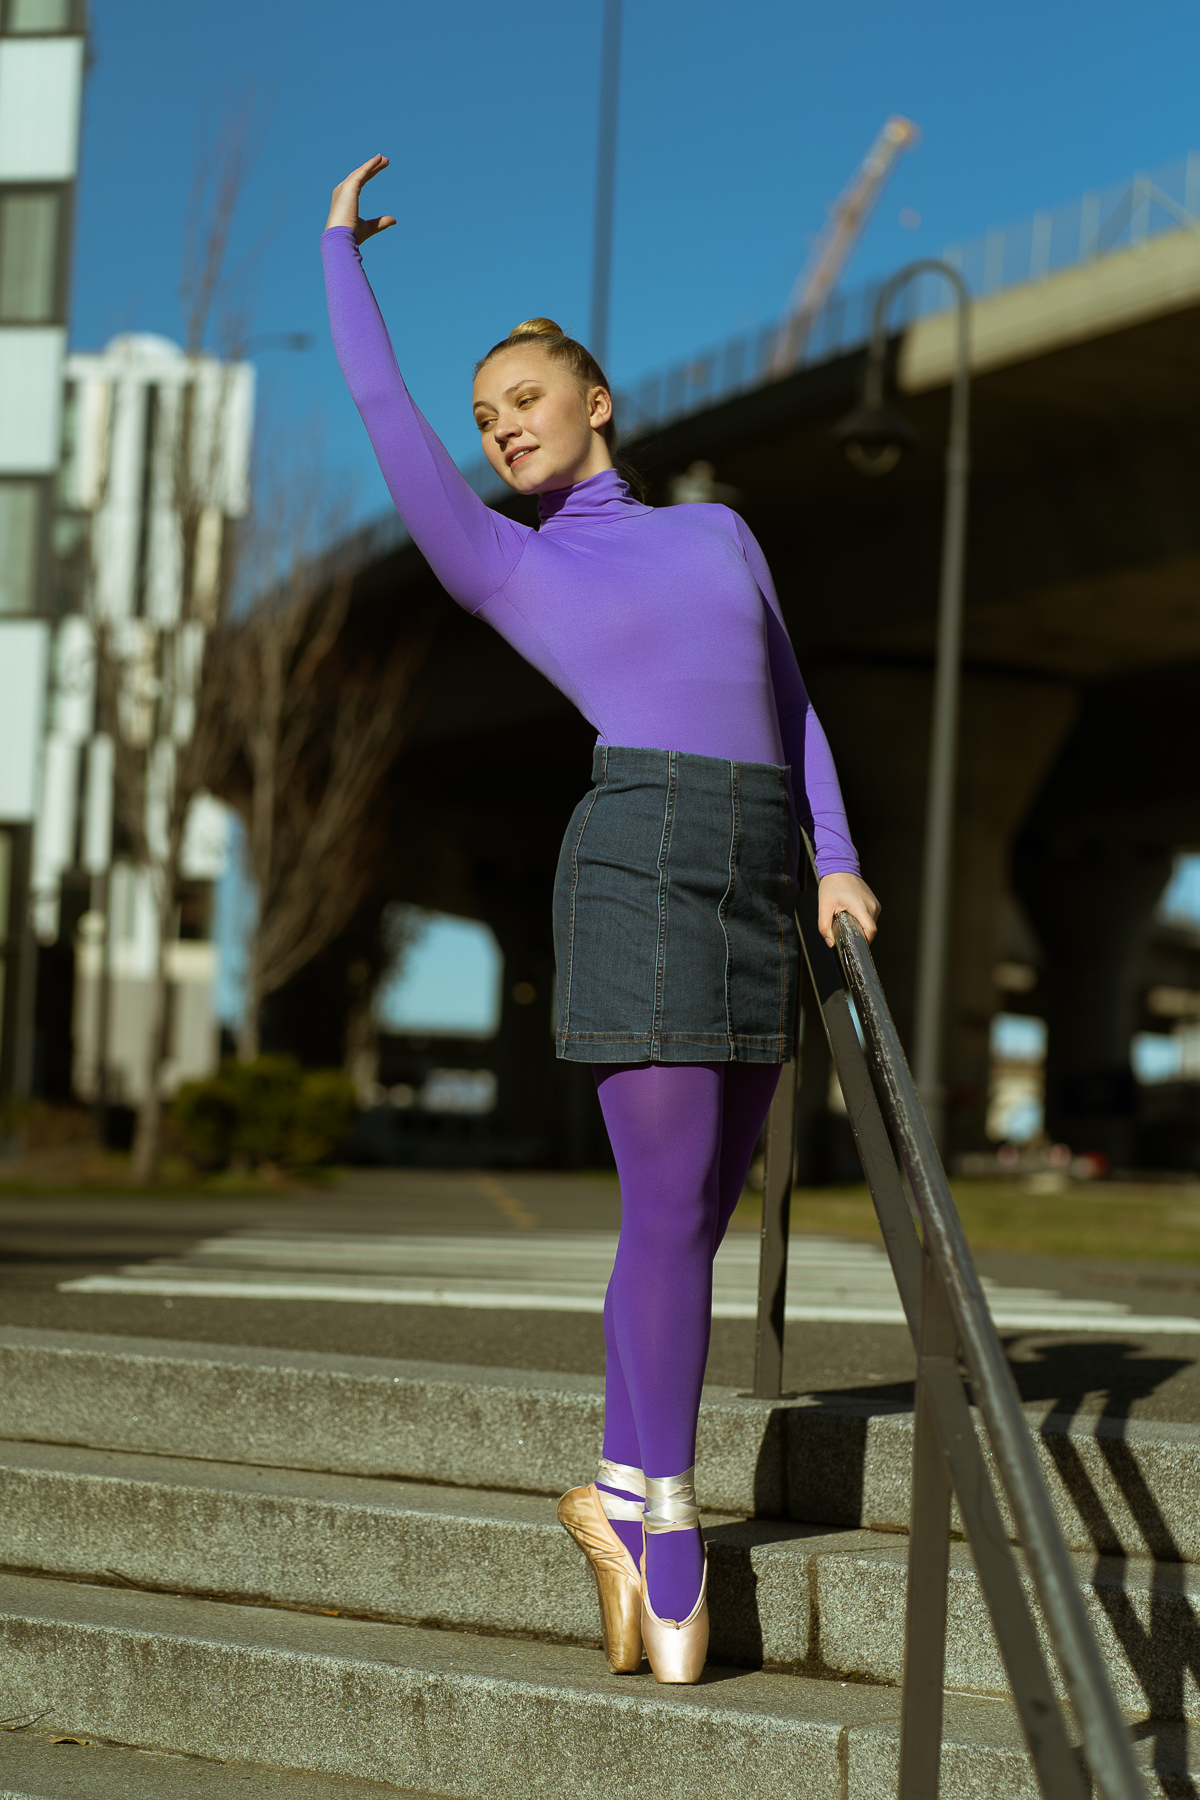 purple-dance-tights-ballerina-city-crosswalk